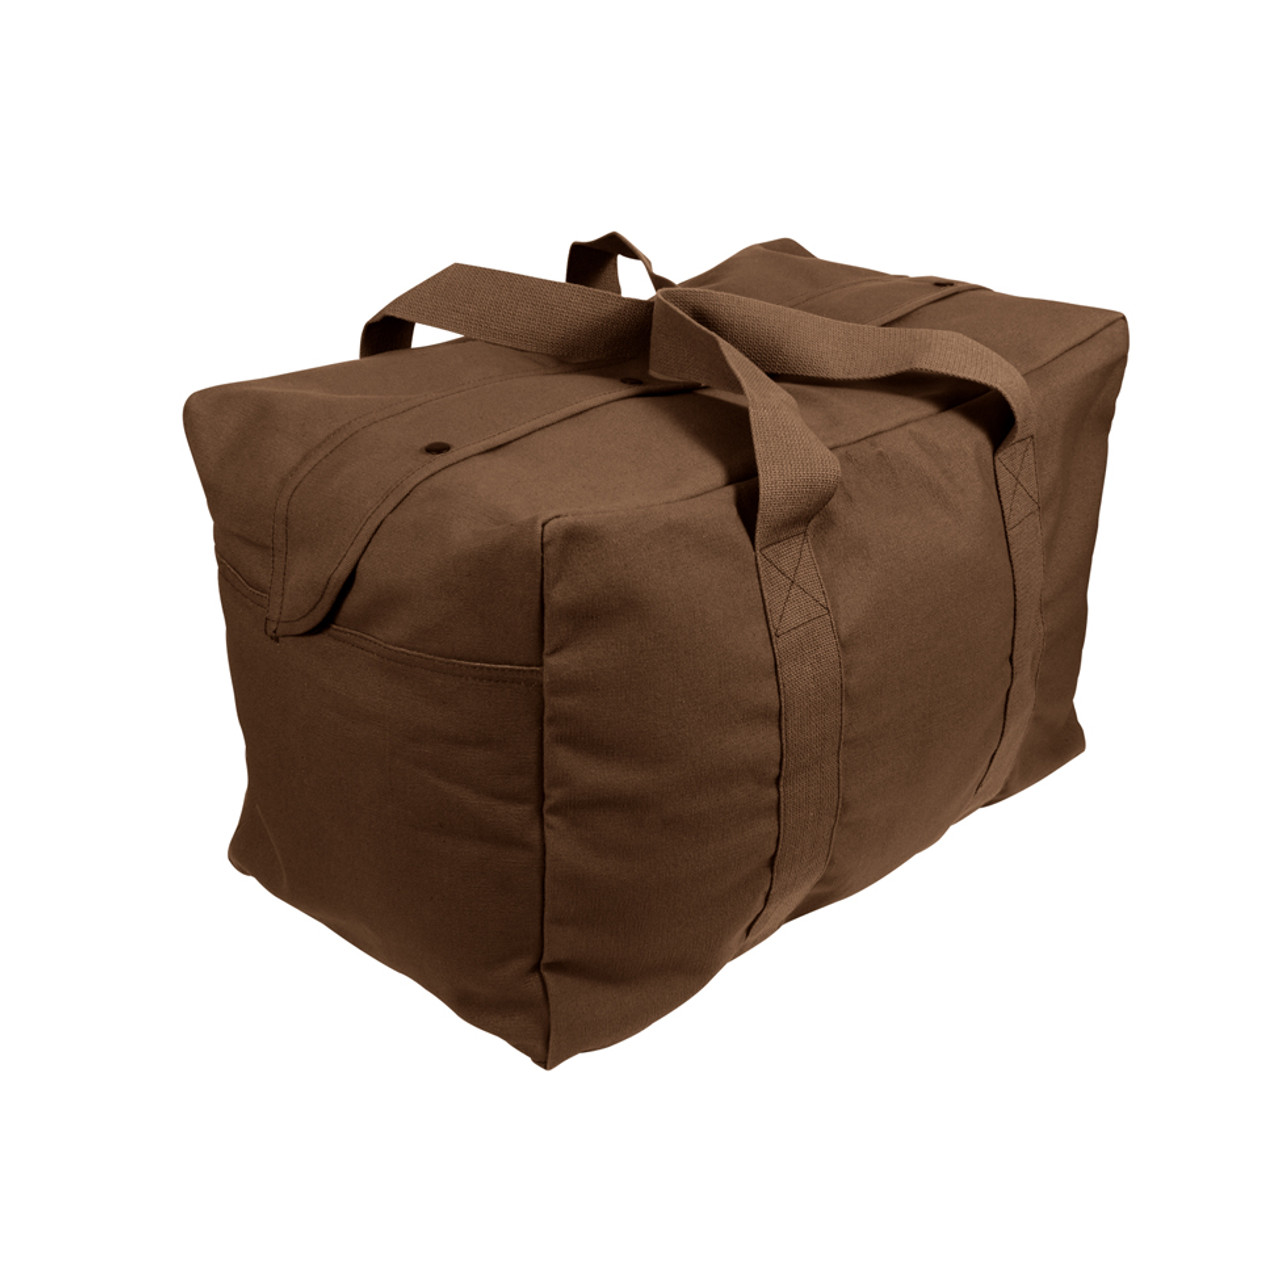 Shop Earth Brown Canvas Parachute Cargo Bags - Fatigues Army Navy